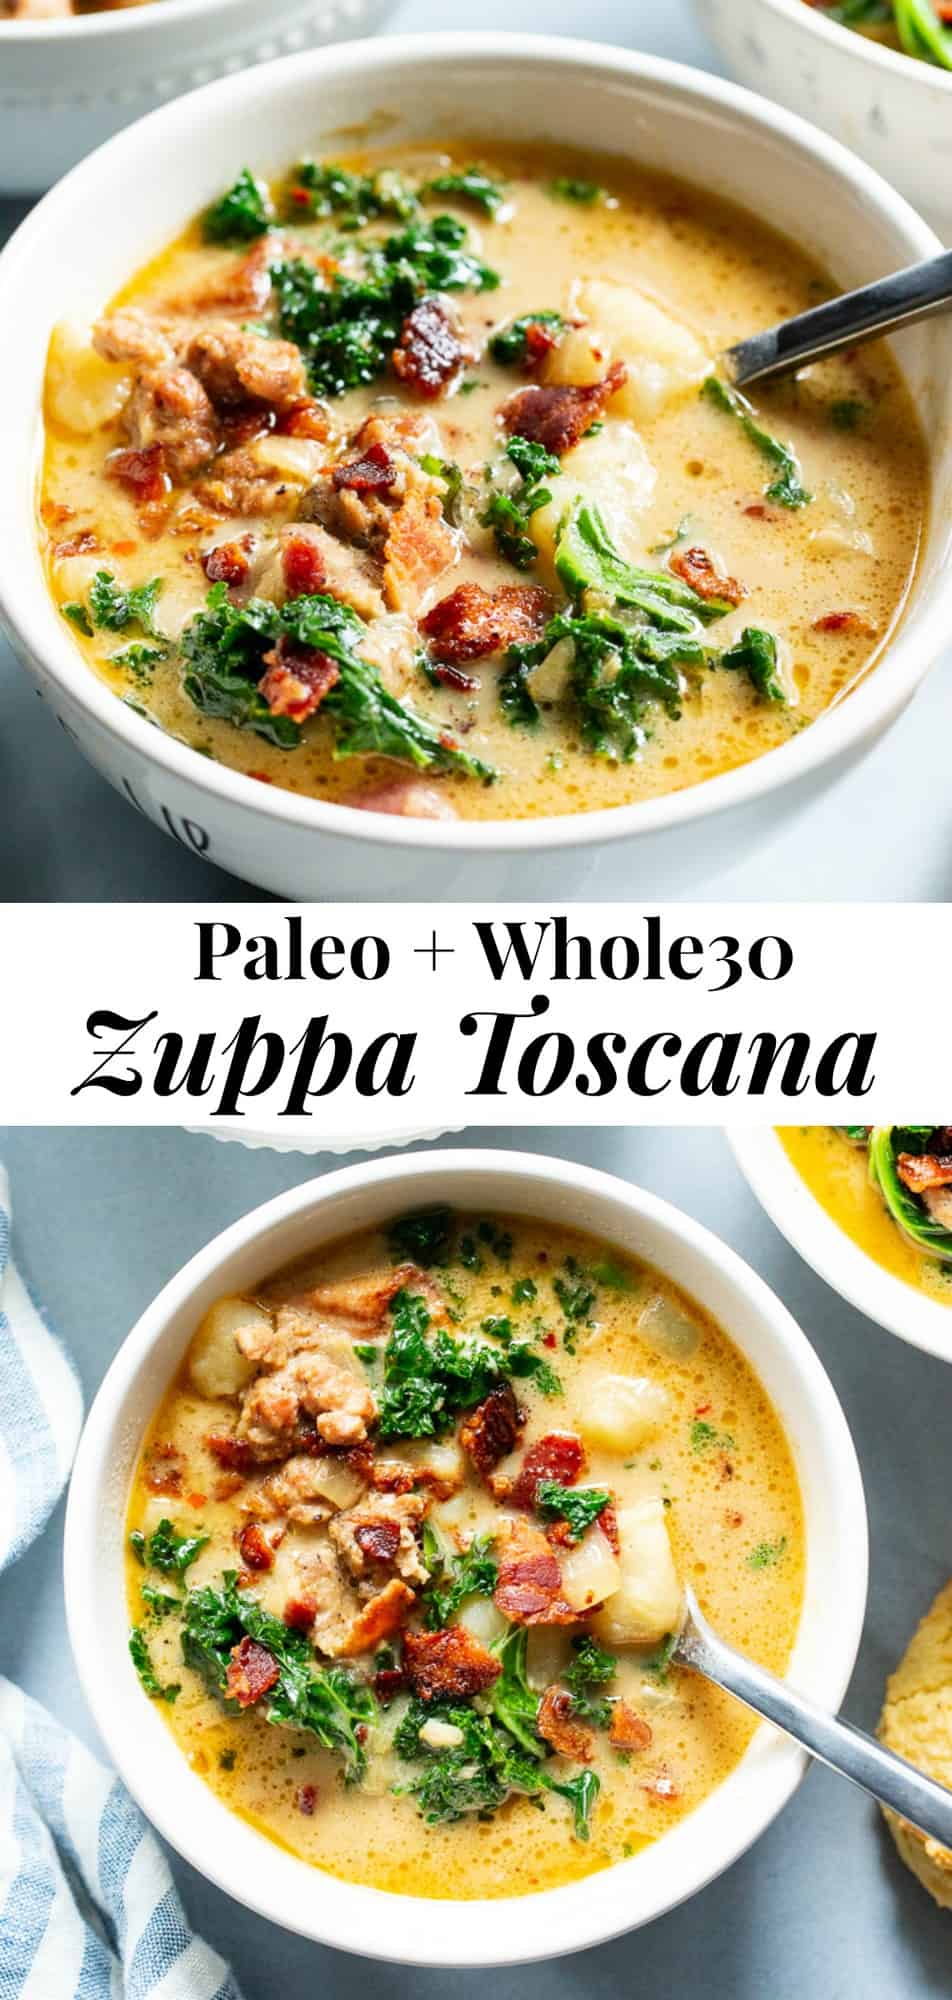 Zuppa Toscana {Paleo, Whole30, Keto Option}